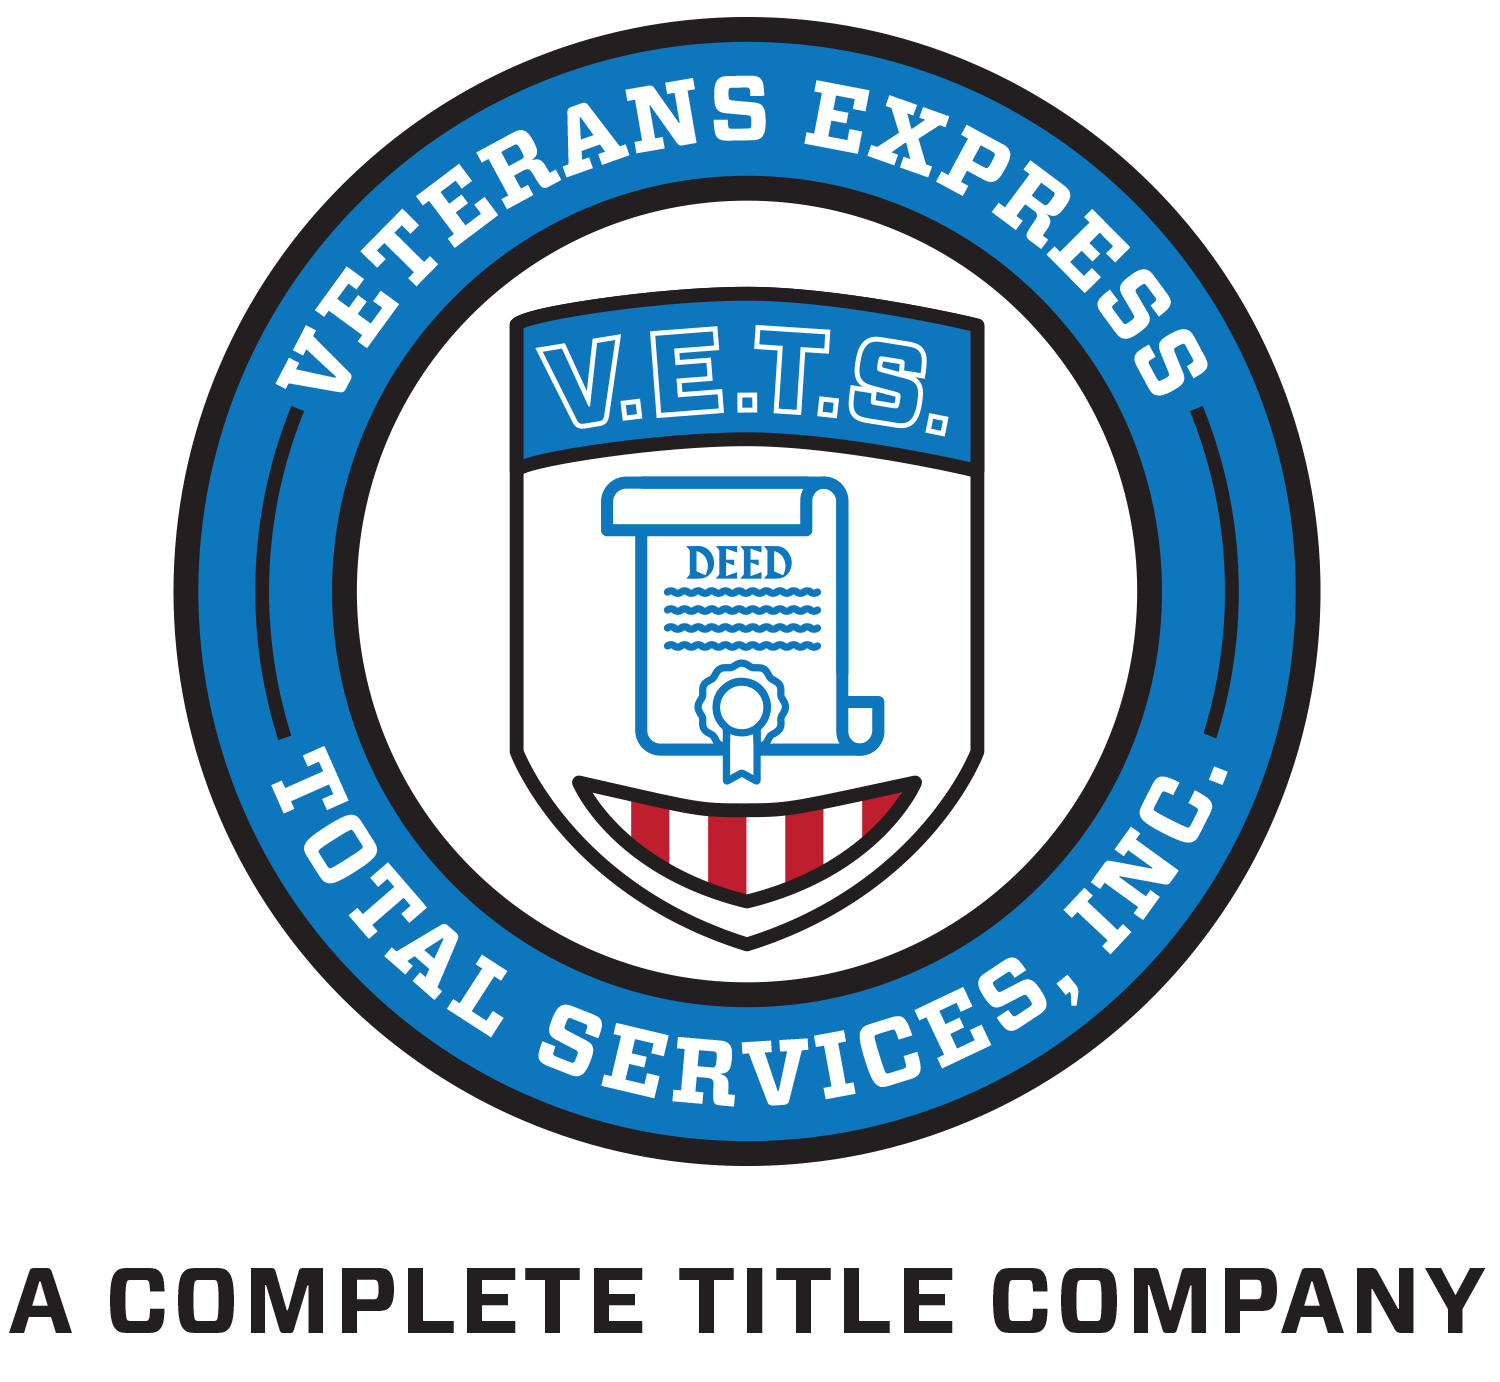 Veterans Express Total Services, Inc. 